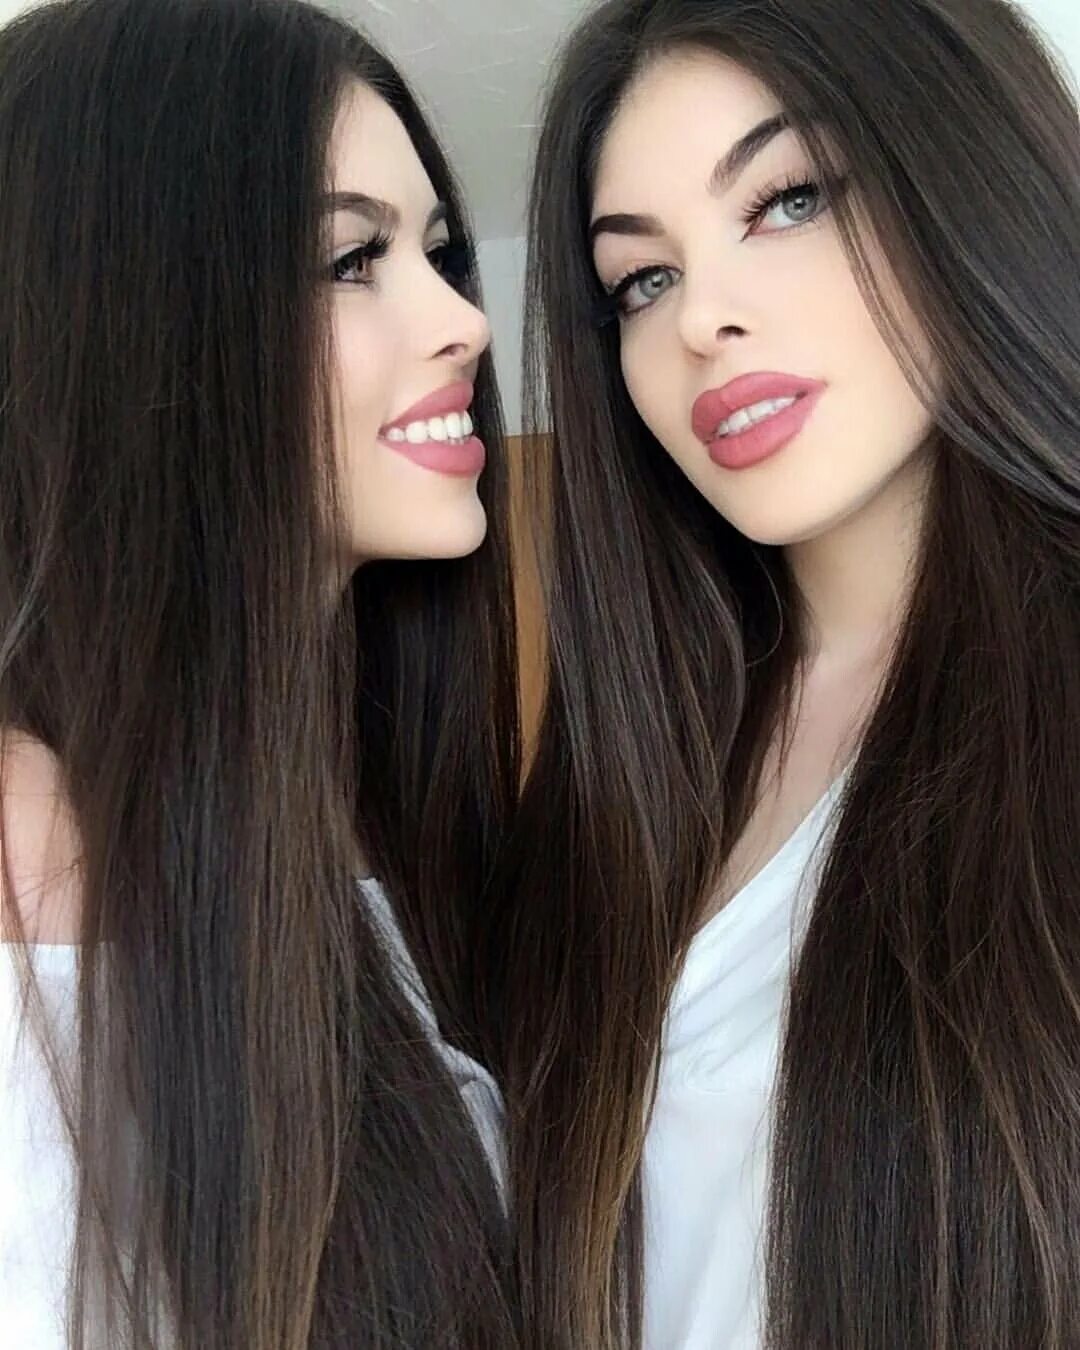 Сестру брюнетку. Близнецы Gülcan & Sahinur. Nerisha Amanda Близнецы. Gülcan Sahinur Twins Близнецы. Близнецы Gülcan Sahinur волосы.